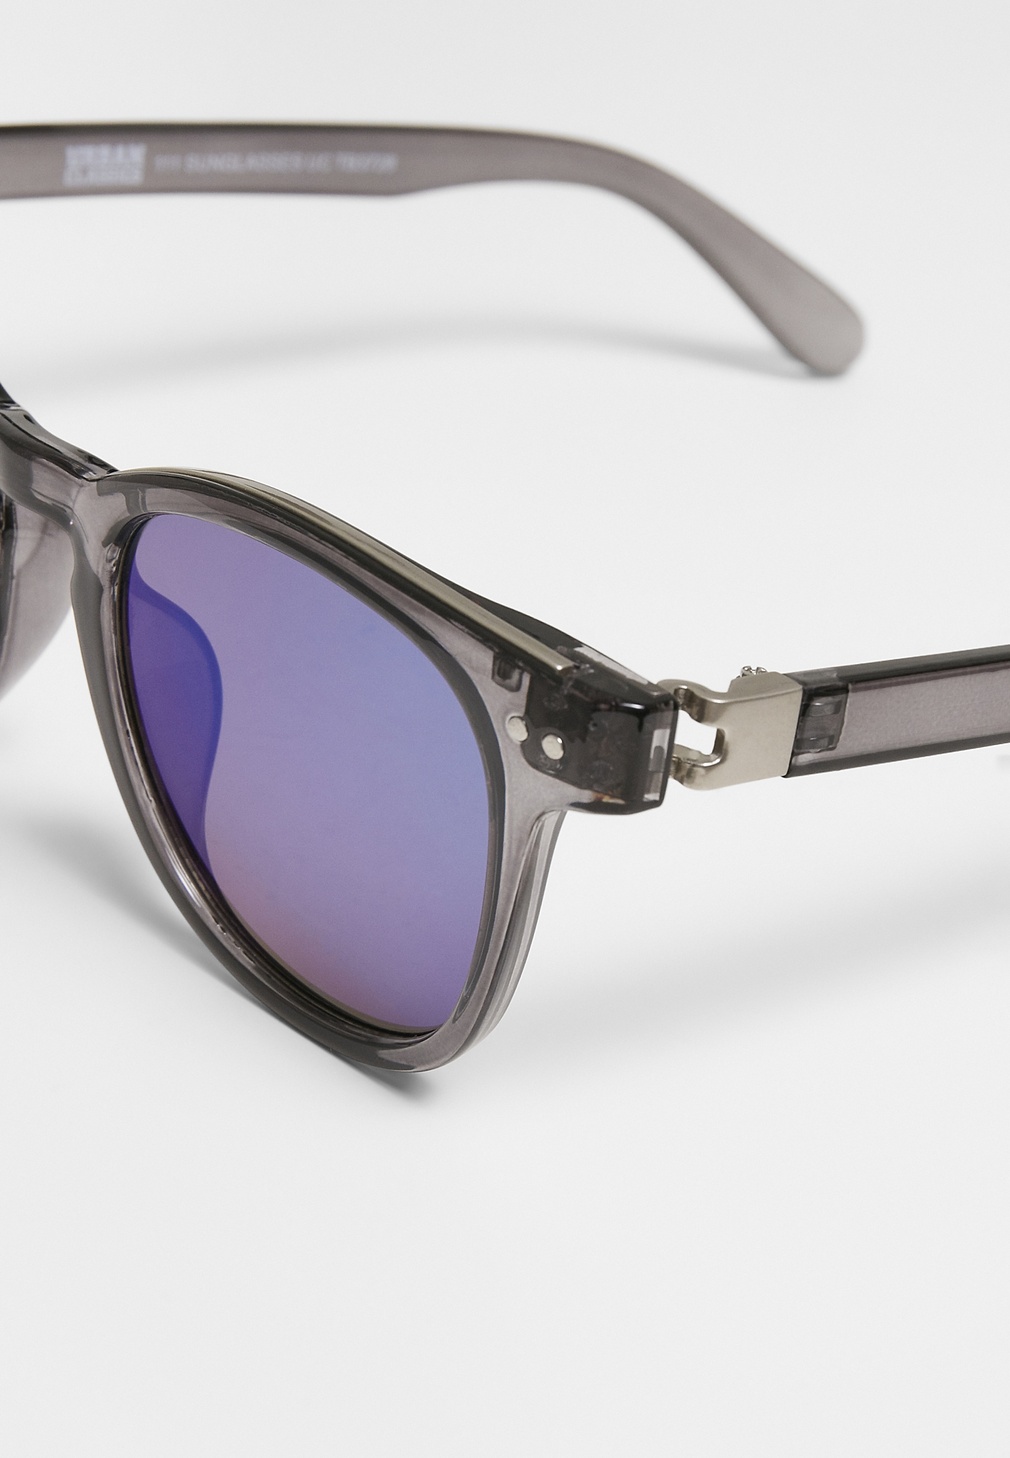 Urban | | Sunglasses Men Classics Glasses Grey/Silver Sunglasses 111 Lifestyle Sun UC |